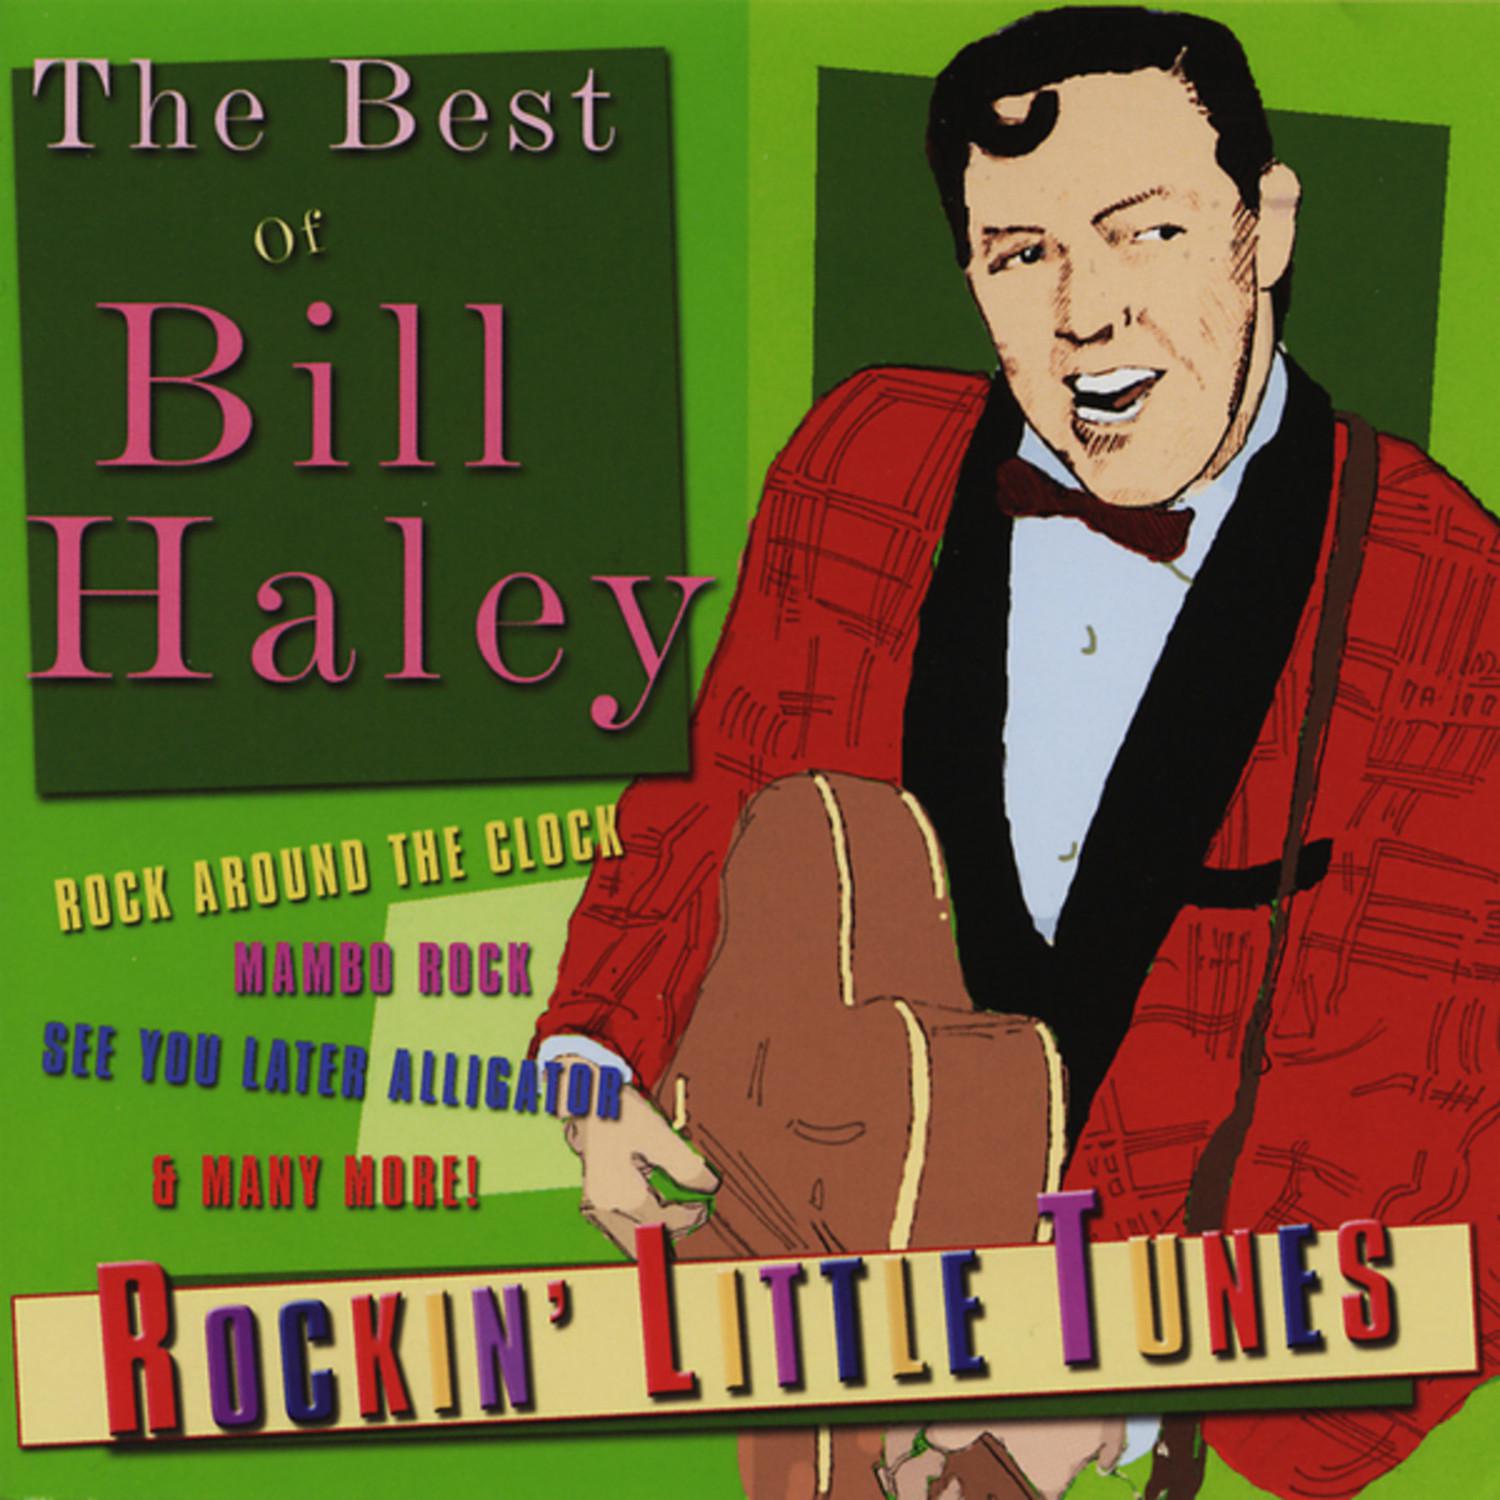 The Best of Bill Haley - Rockin' Little Tunes Vol. 2